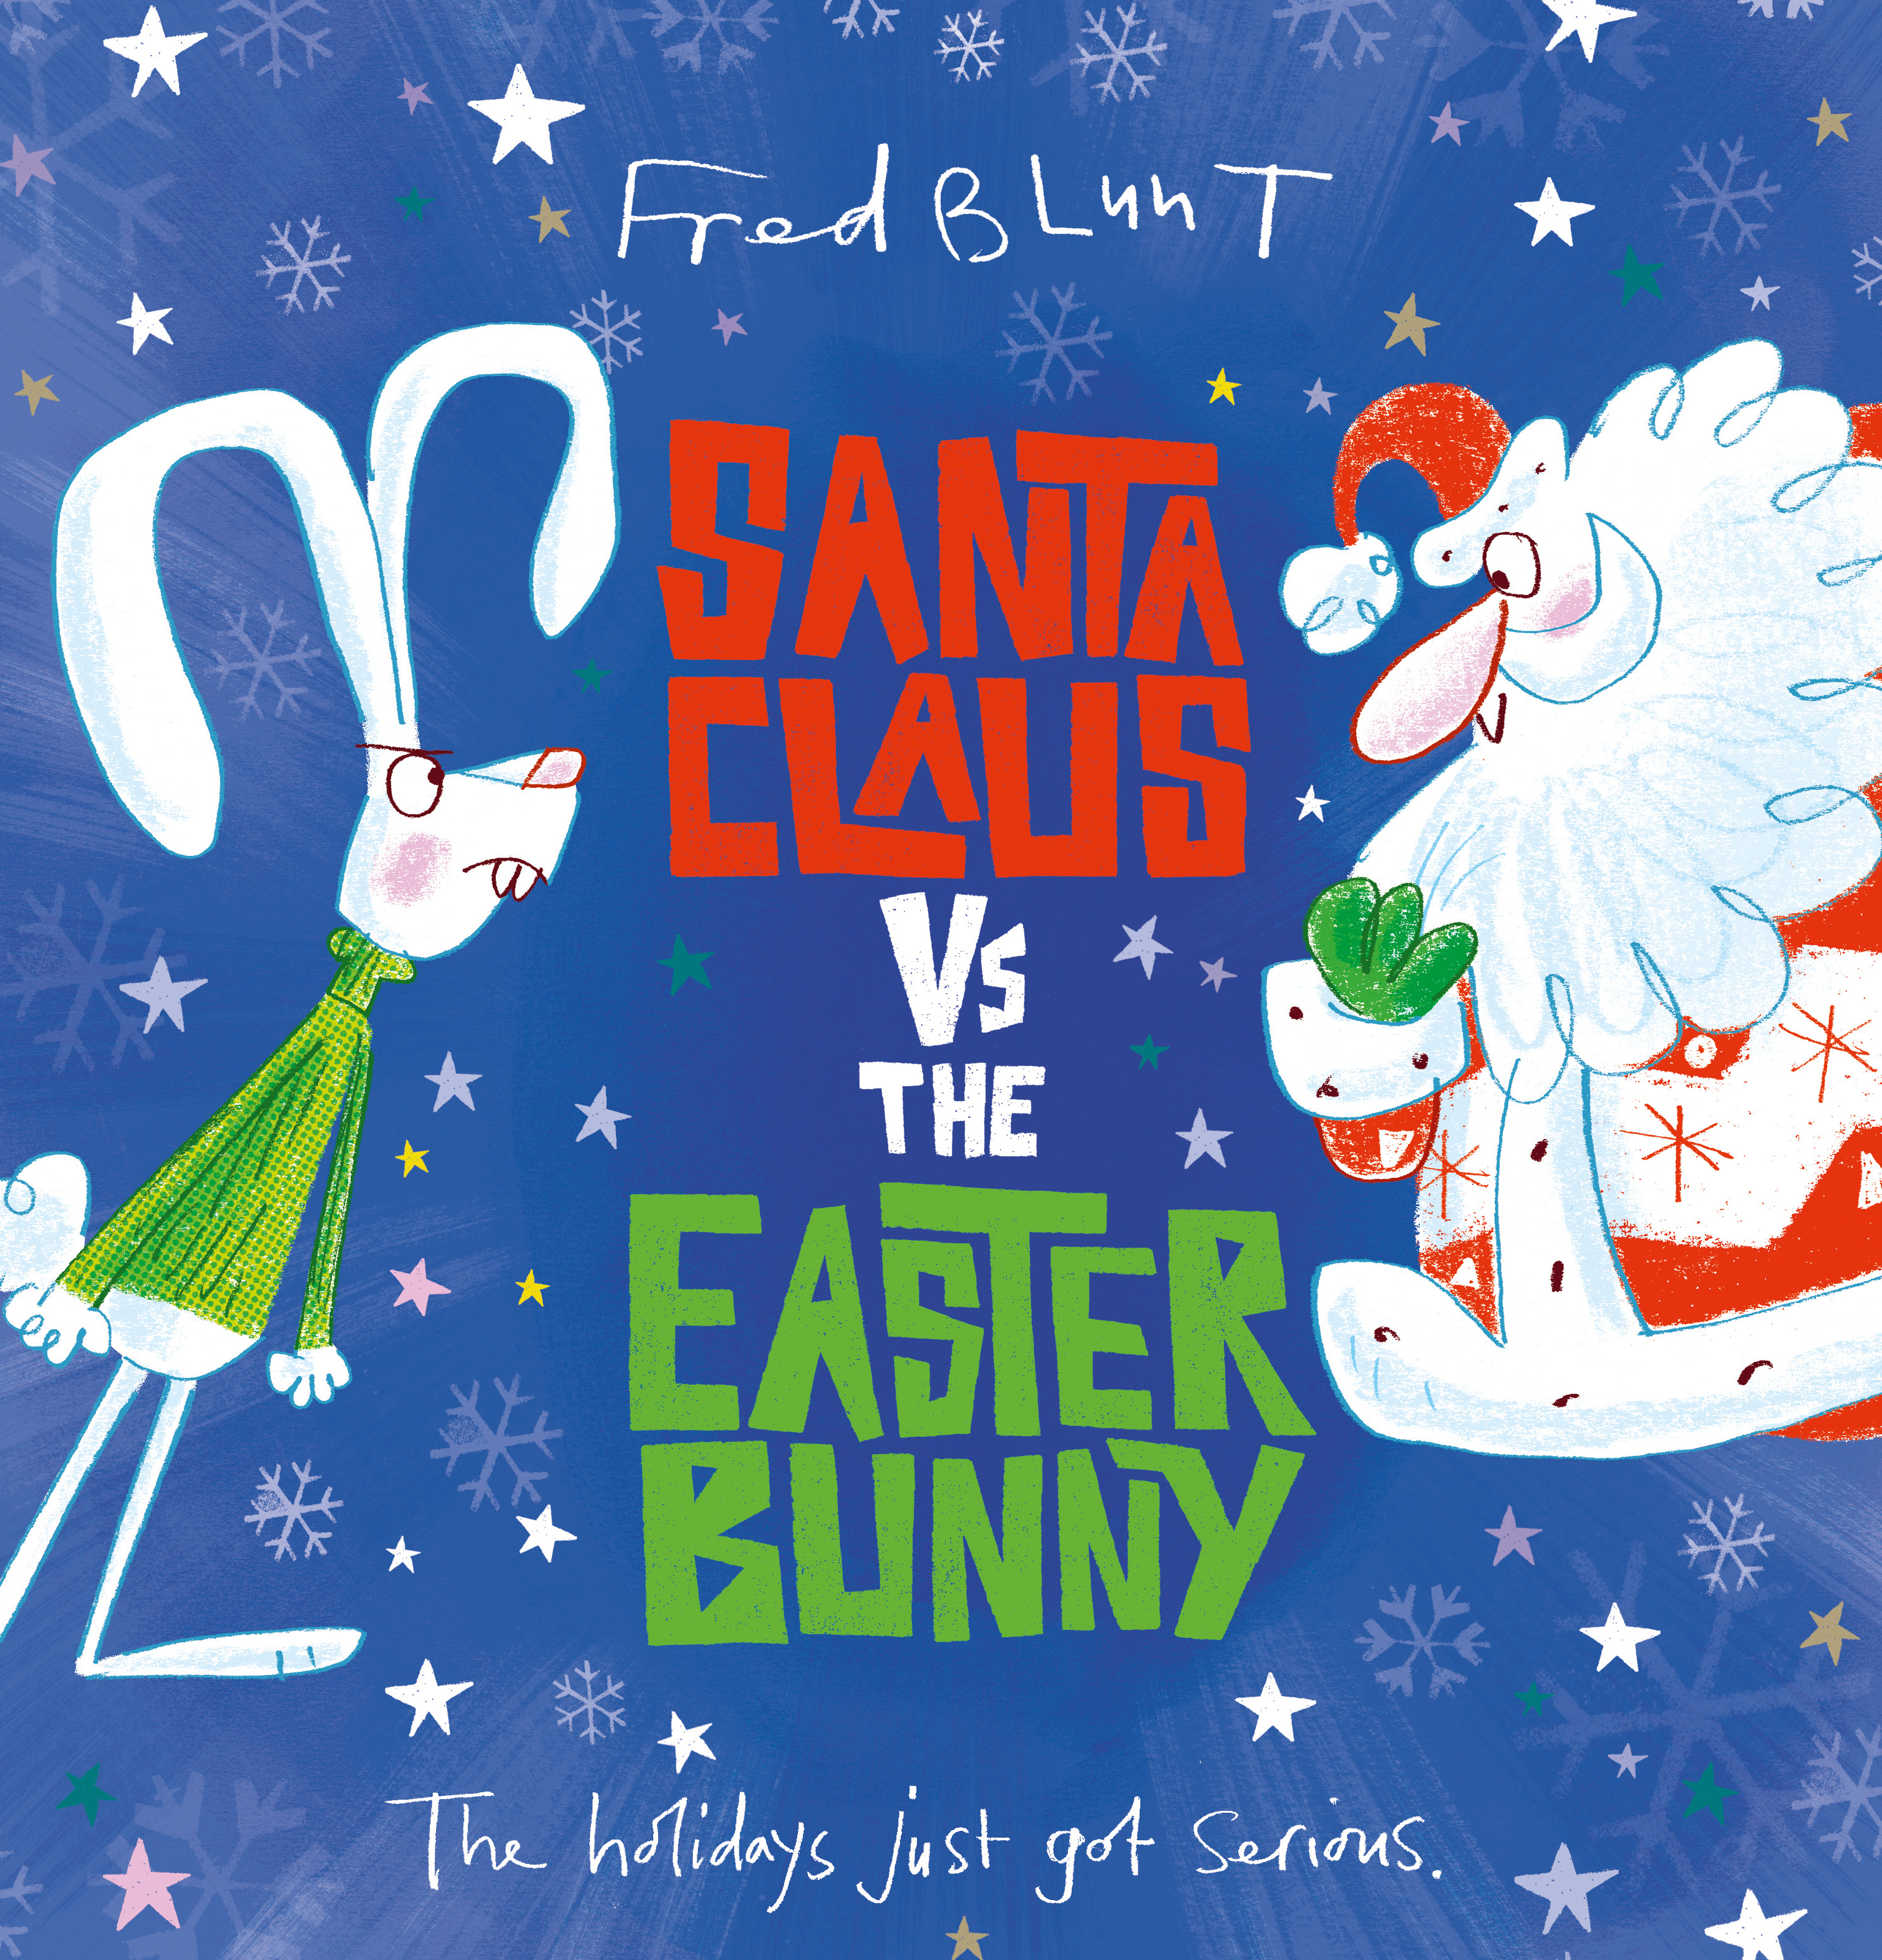 Santa Claus vs The Easter Bunny